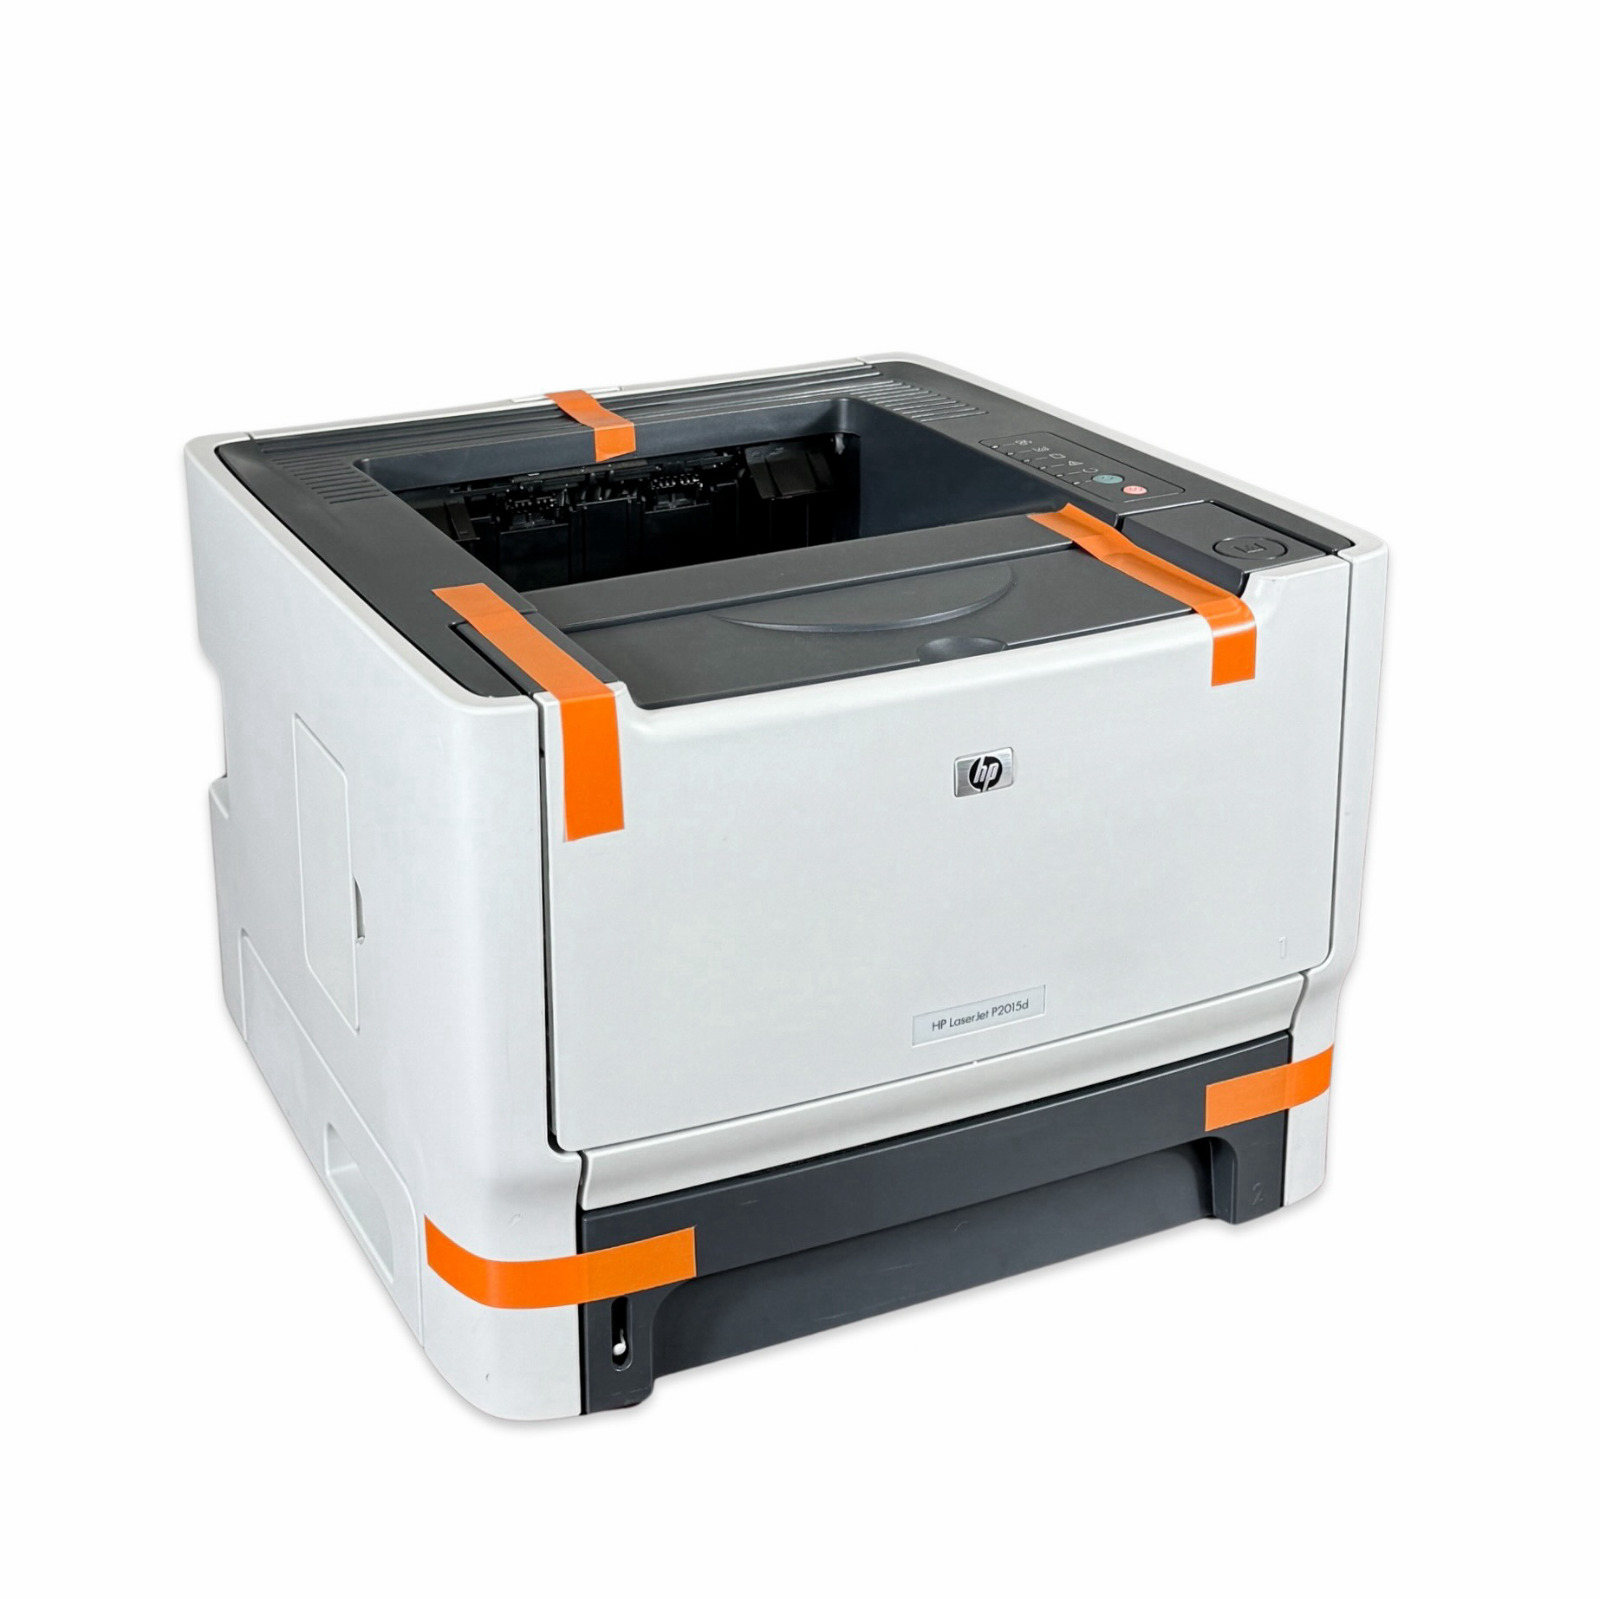 HP LaserJet P2015d Workgroup Monochrome Laser Printer CB367A w/ toner